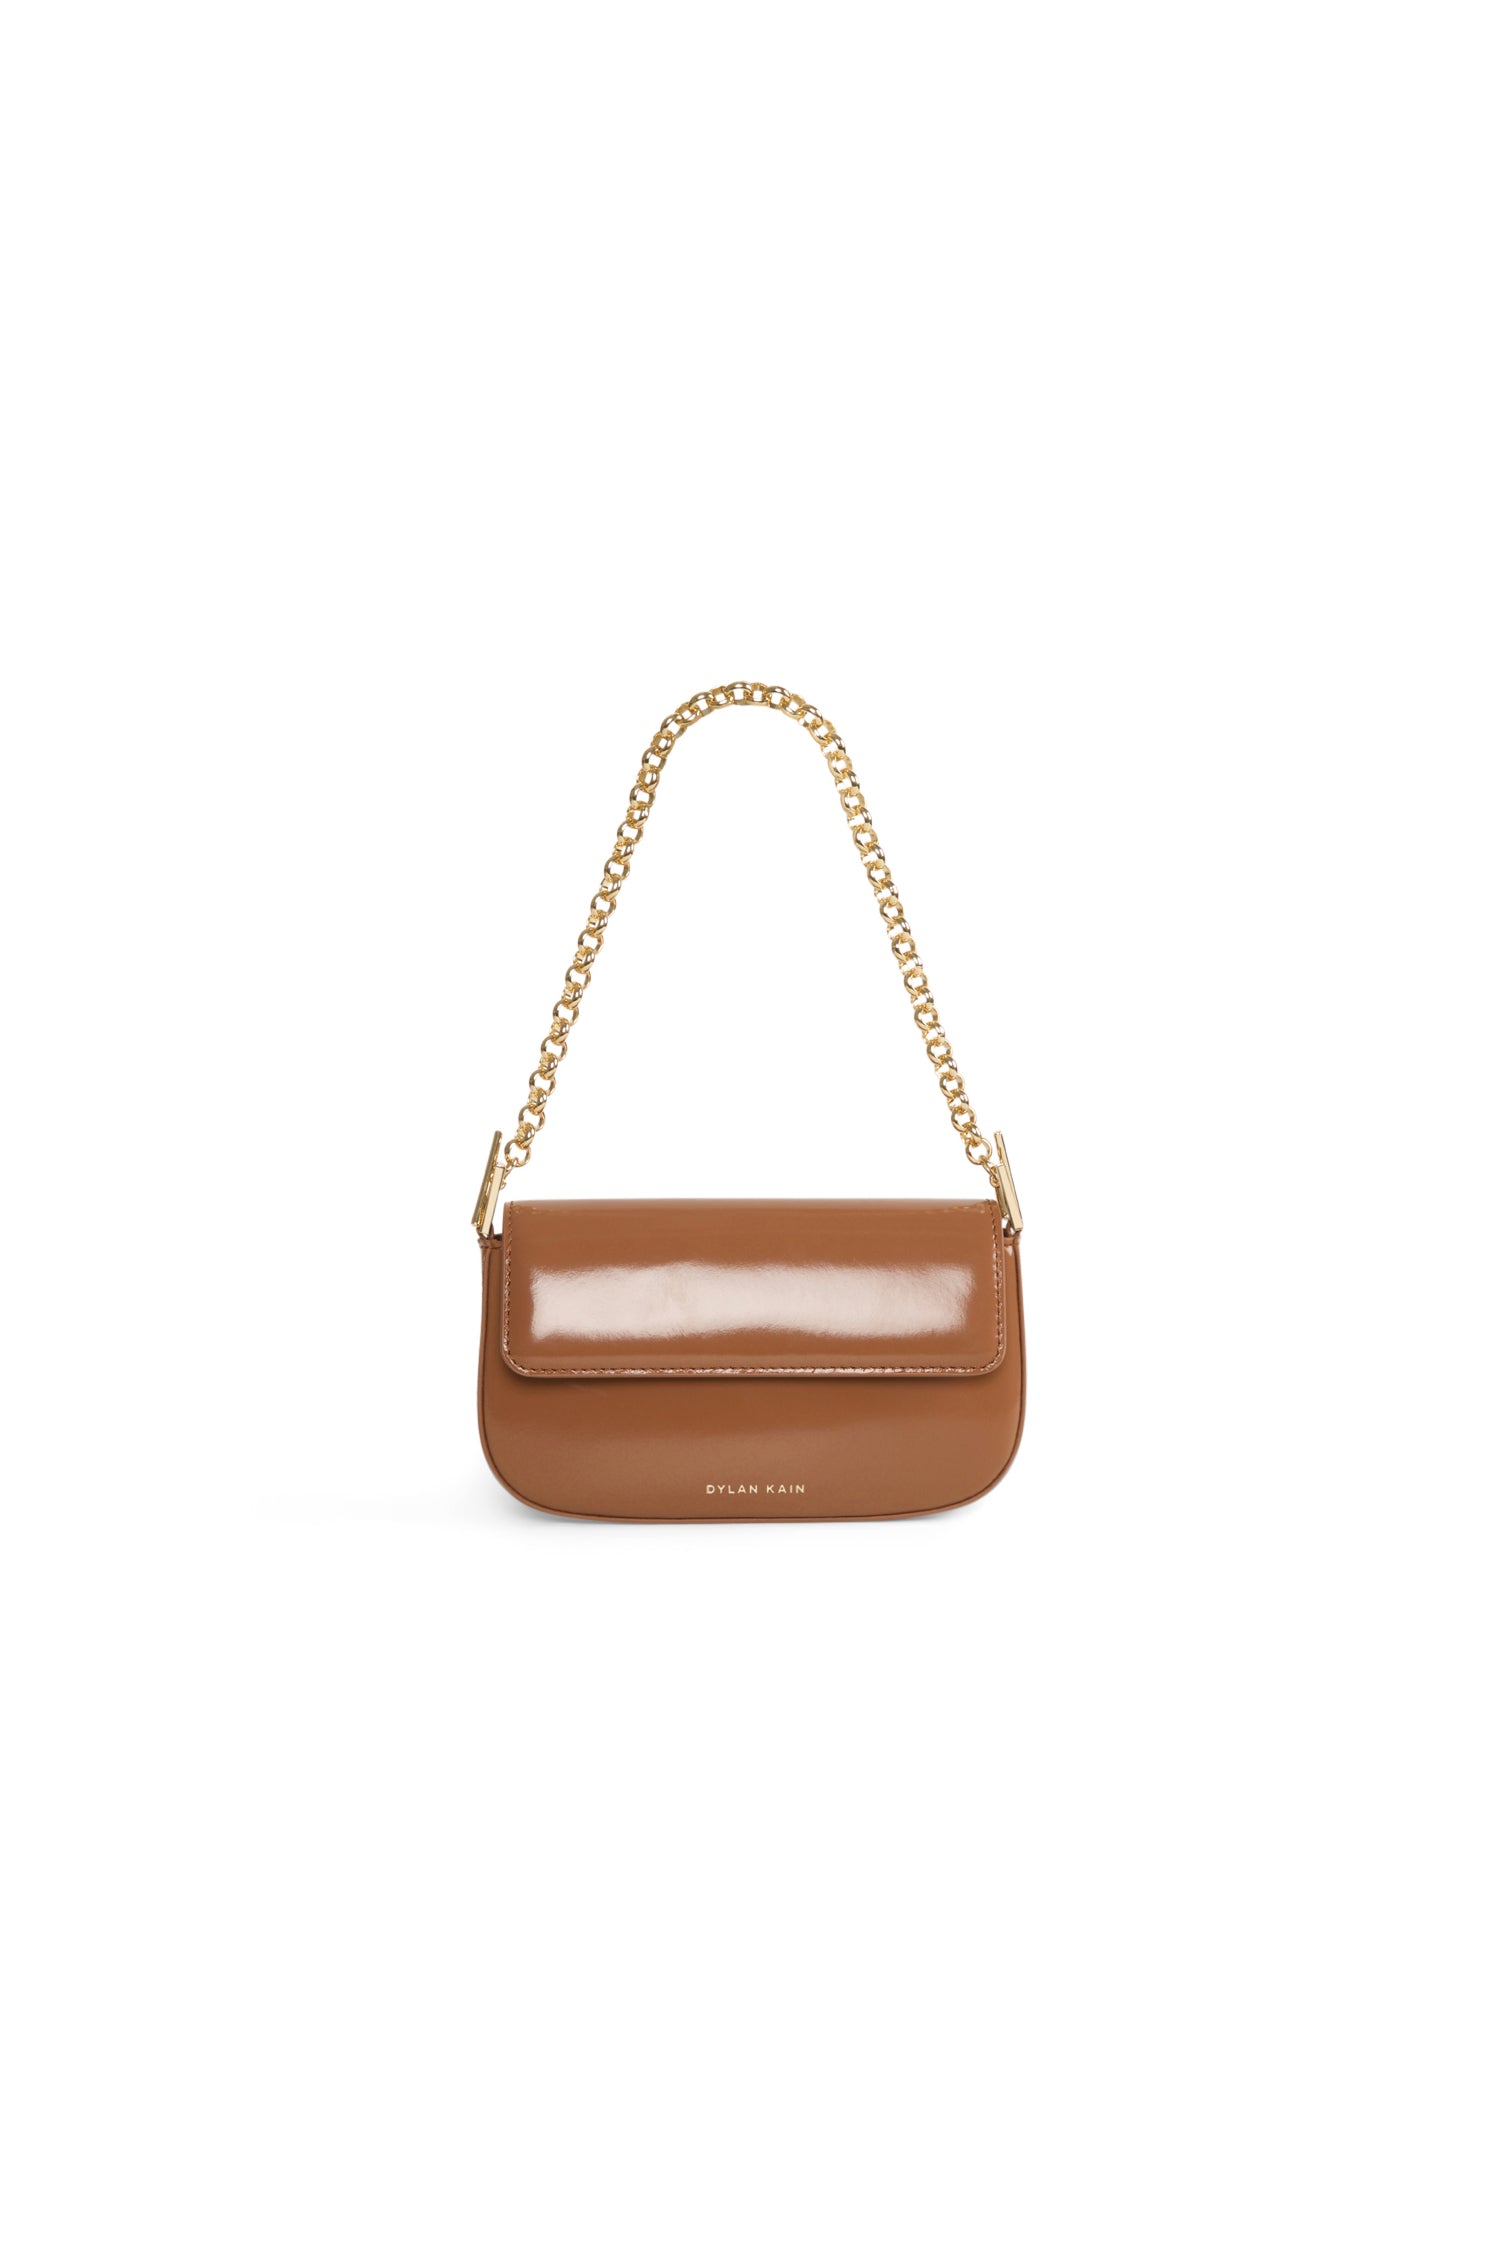 SAMPLE - The Amelia Patent Bag Chocolate Light Gold